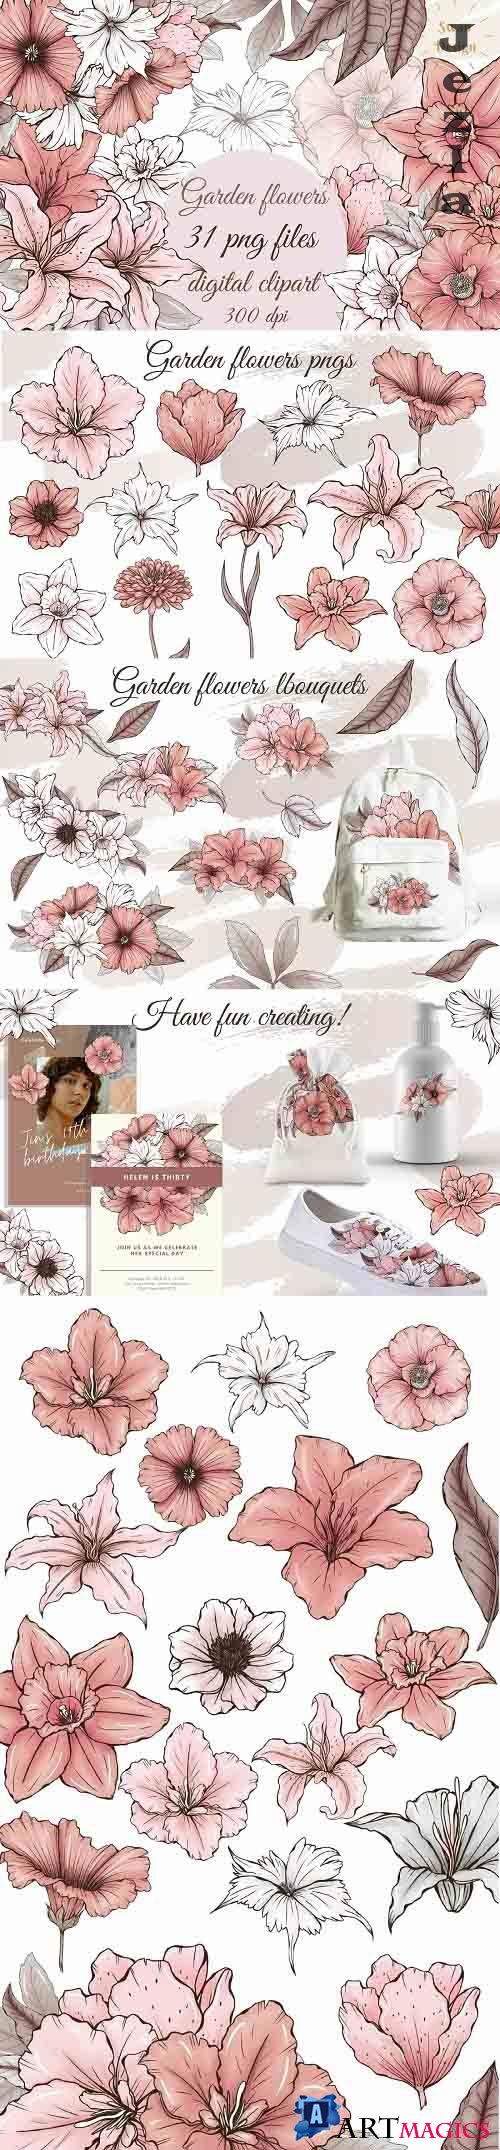 Cute pink garden flowers clipart, wedding floral design png - 1382445